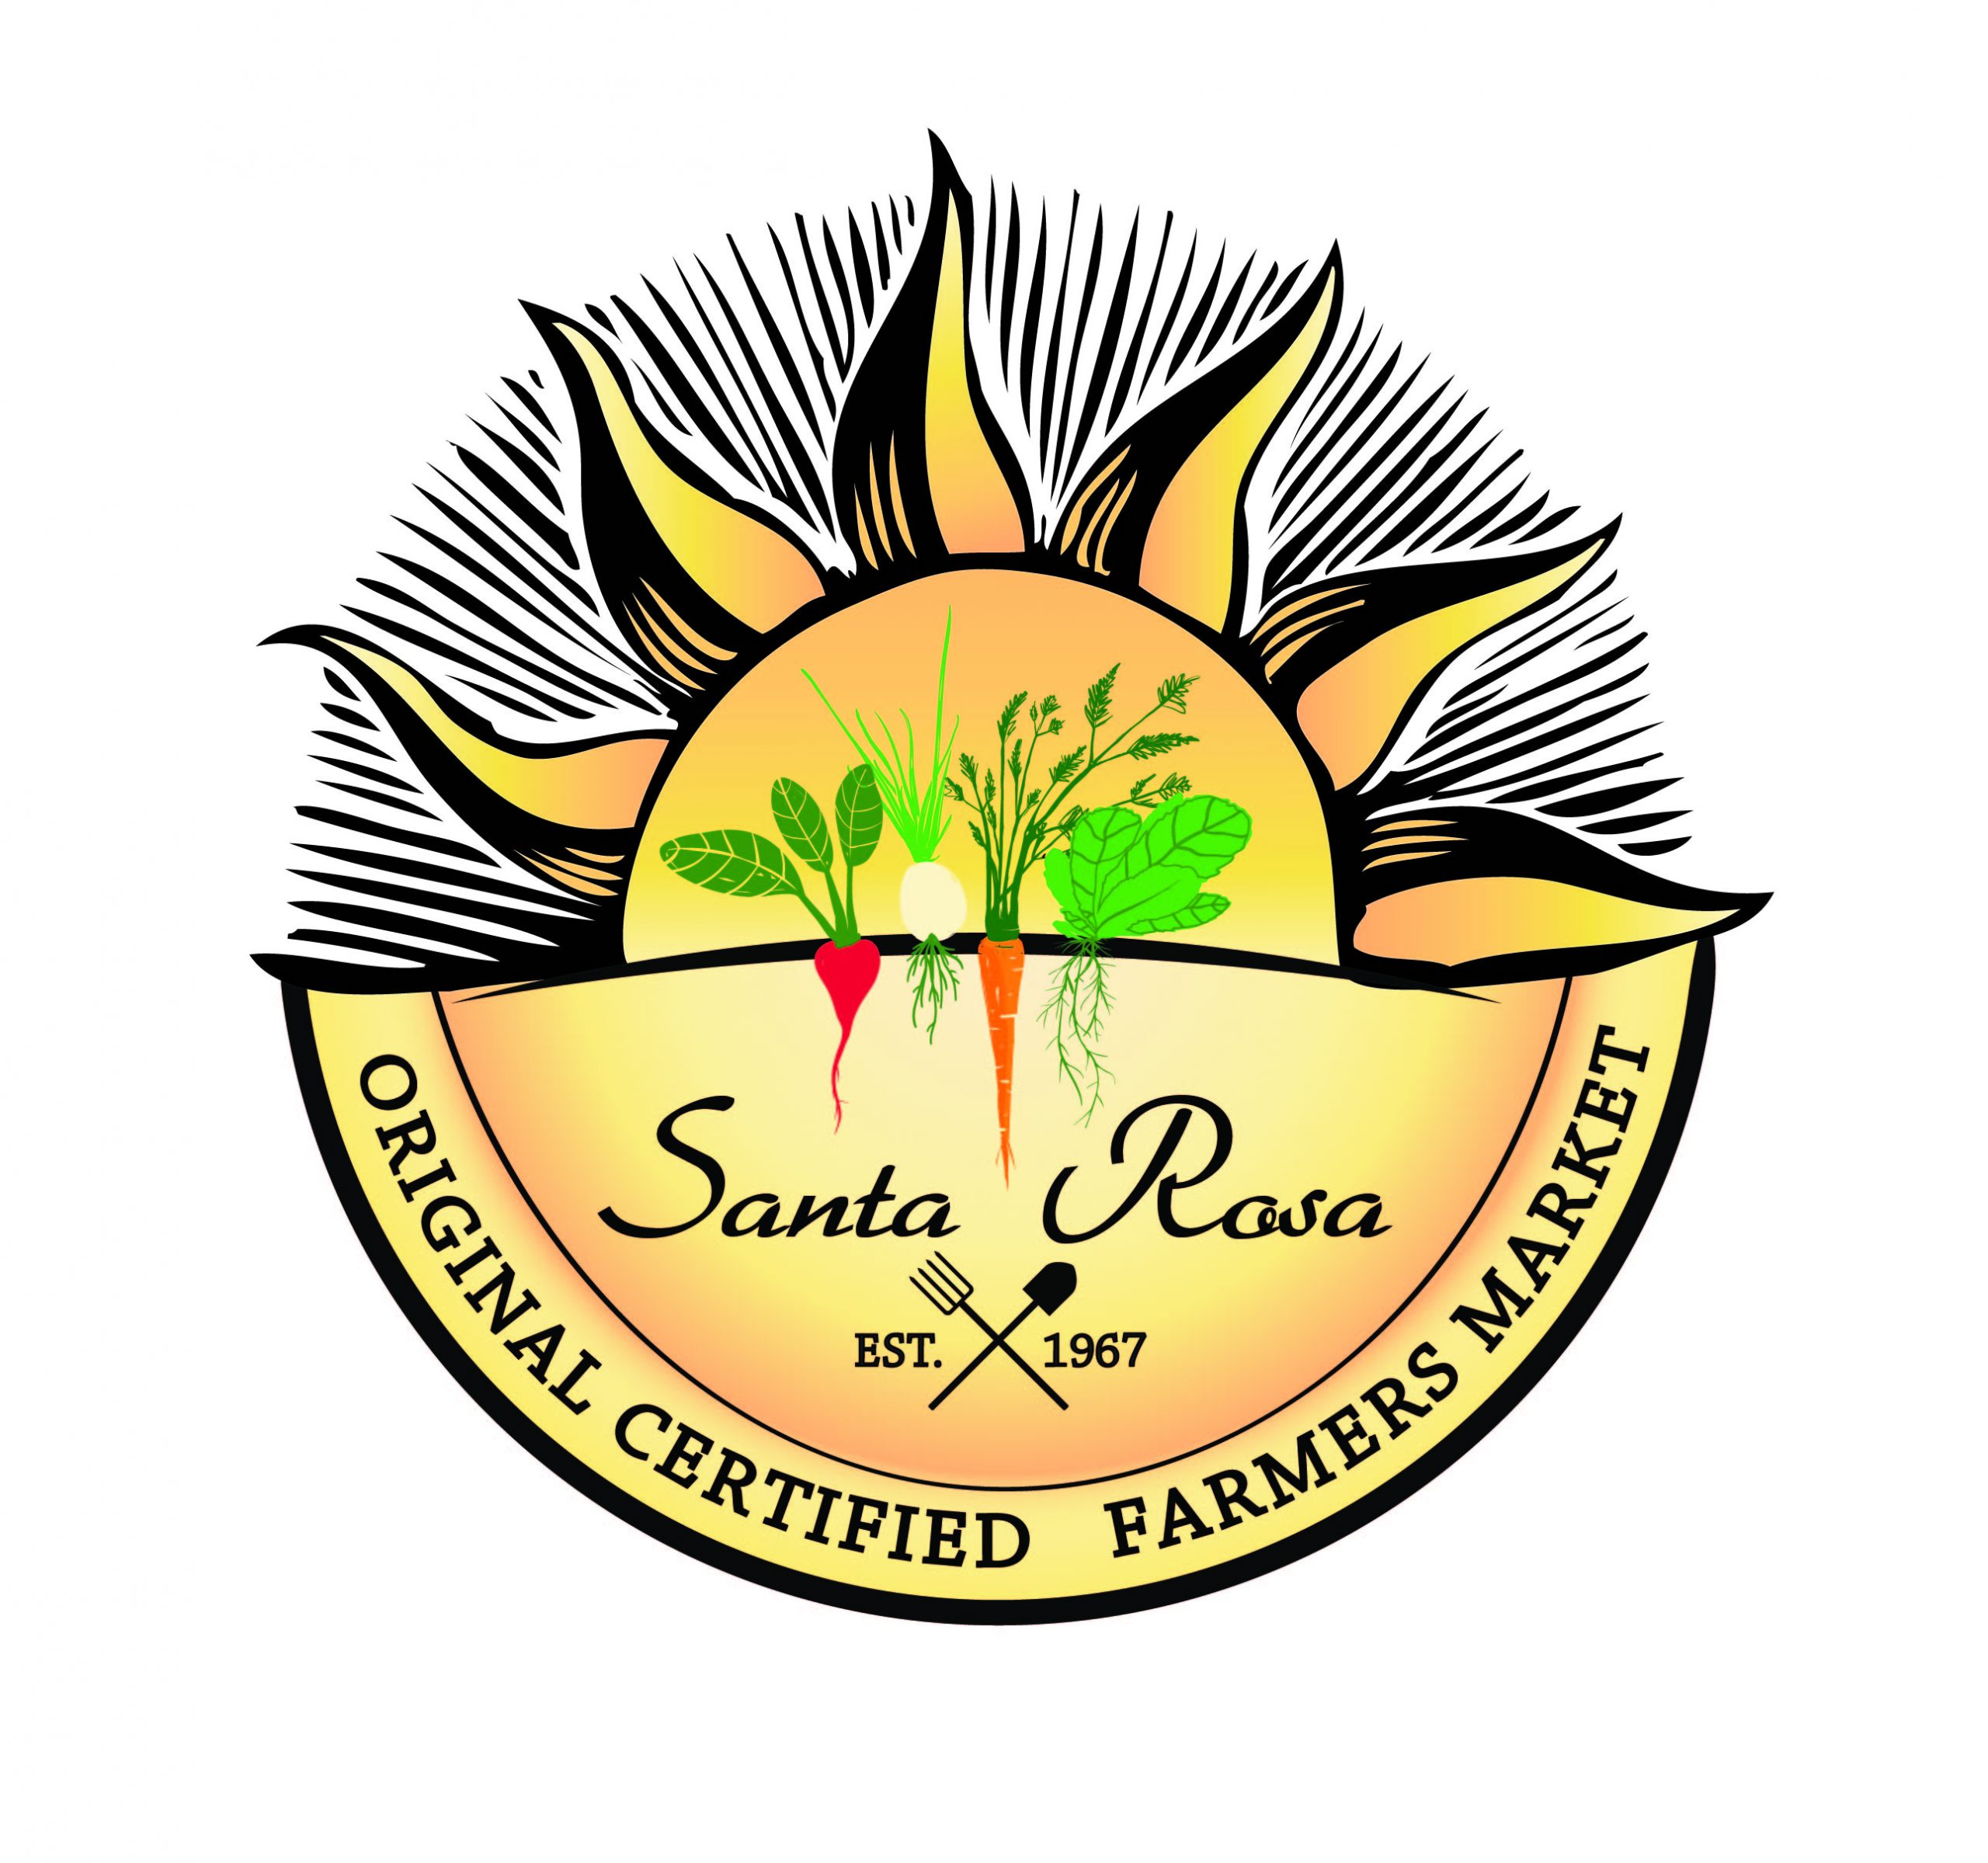 Santa Rosa Original Certified Farmers Market